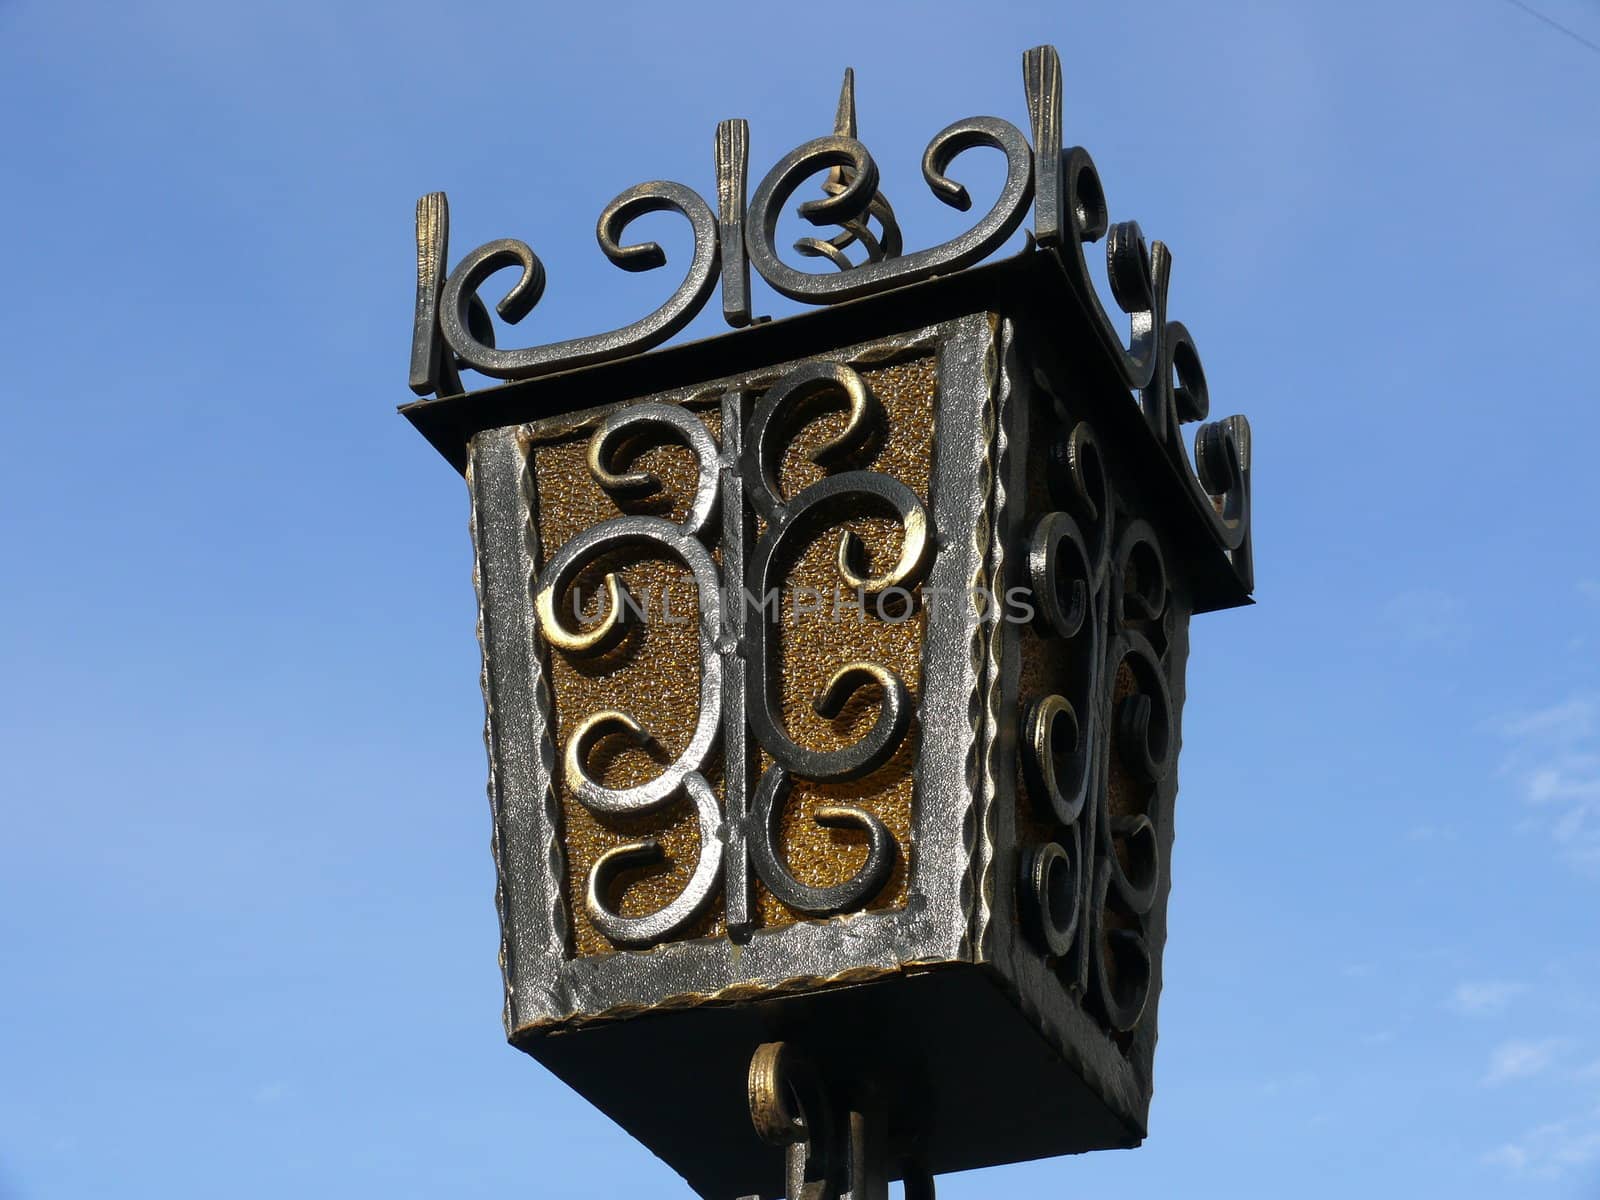 Old lantern in blue sky background